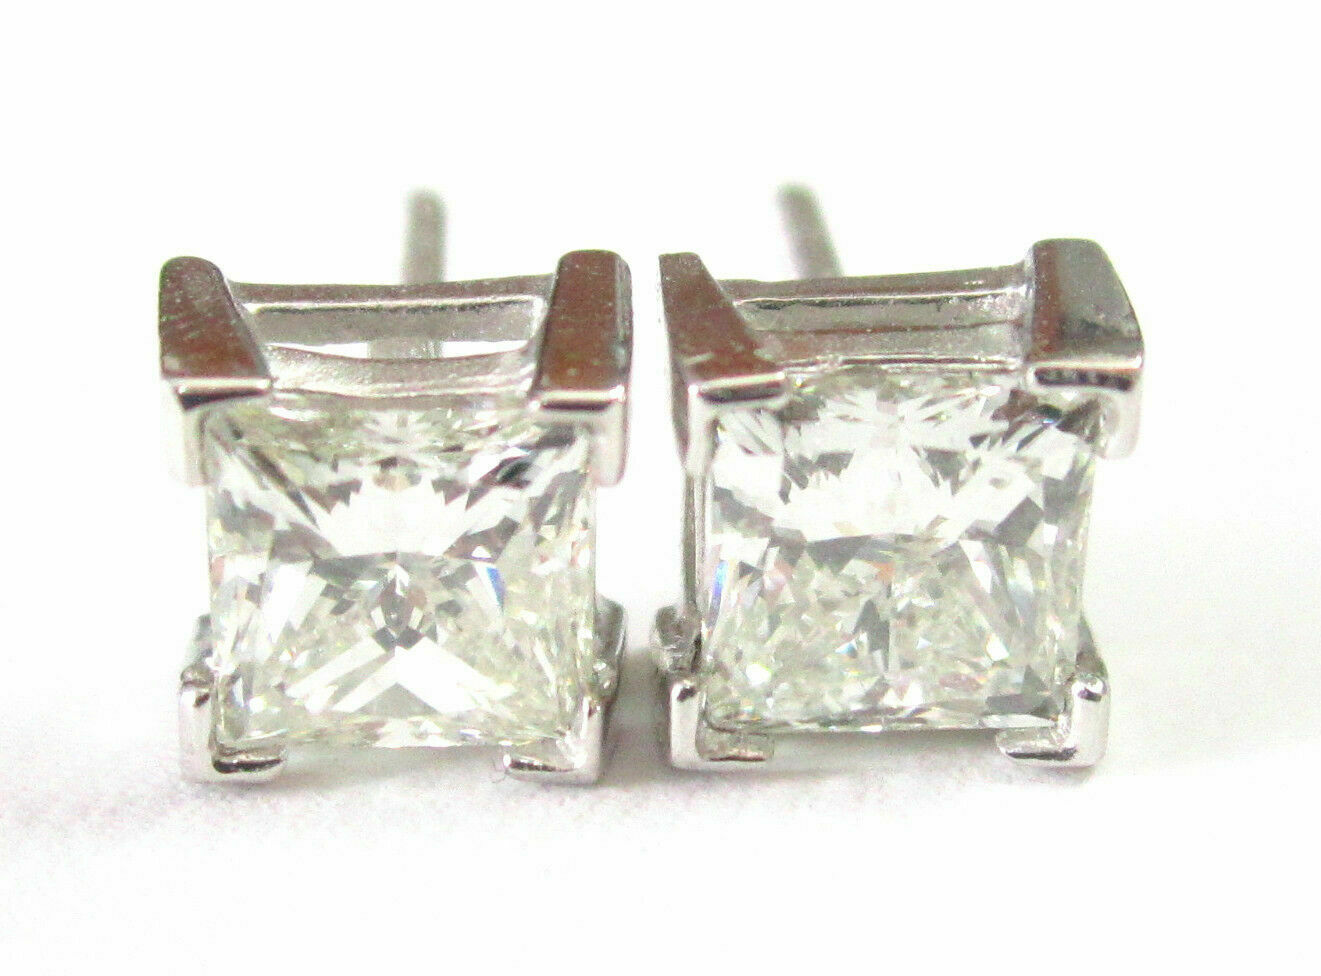 2.14 TCW Princess Cut Diamond Stud Earrings Screw Back G VS2-SI1 14k White Gold